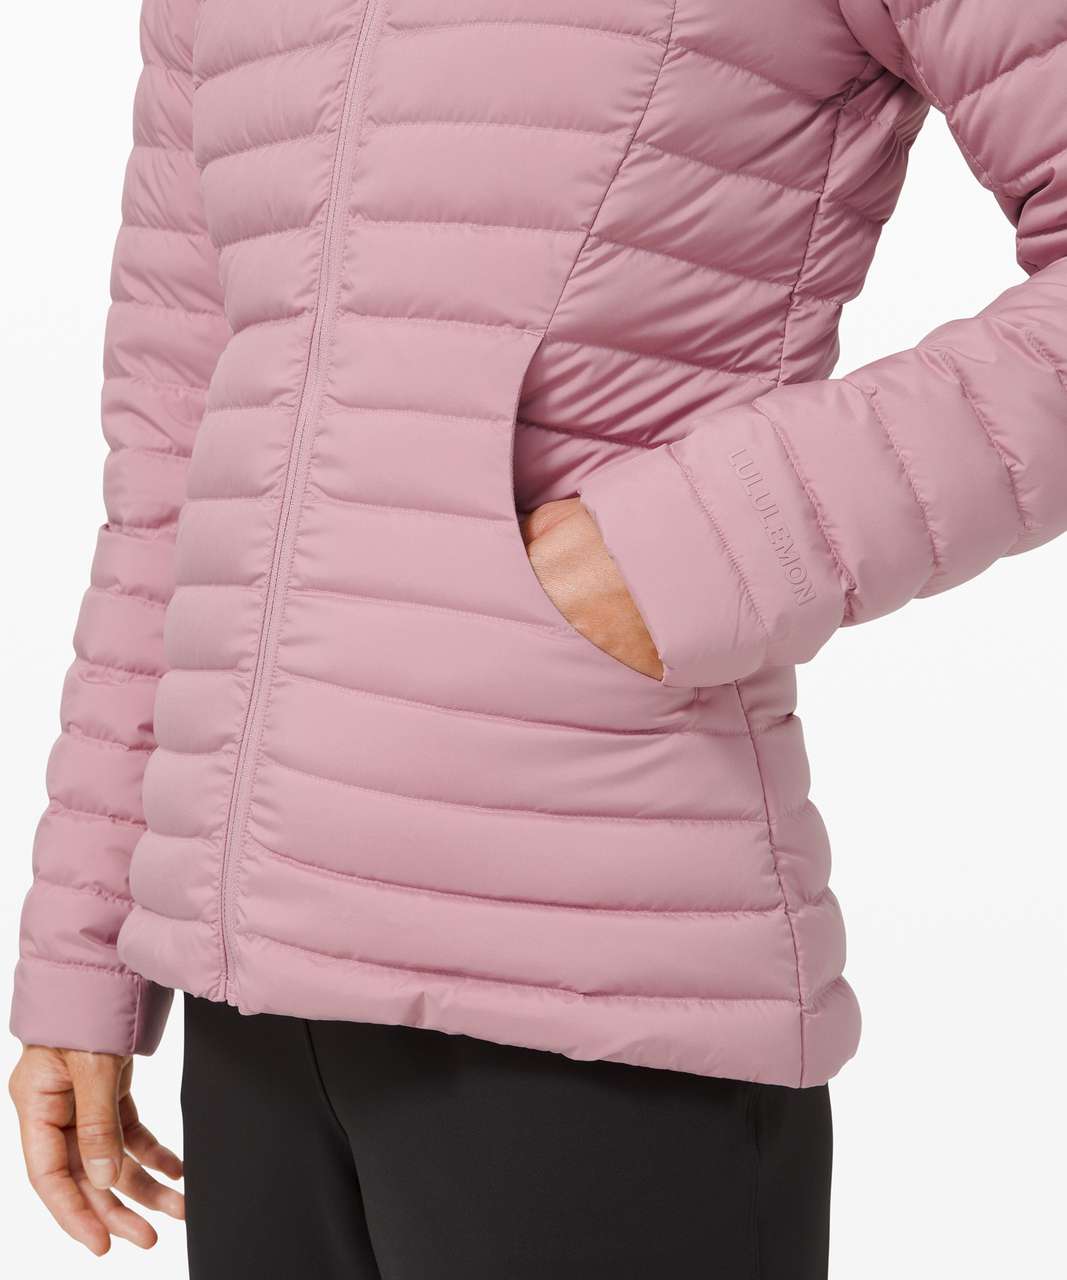 Lululemon Insulated Waterproof Jacket - Pink Mist - lulu fanatics